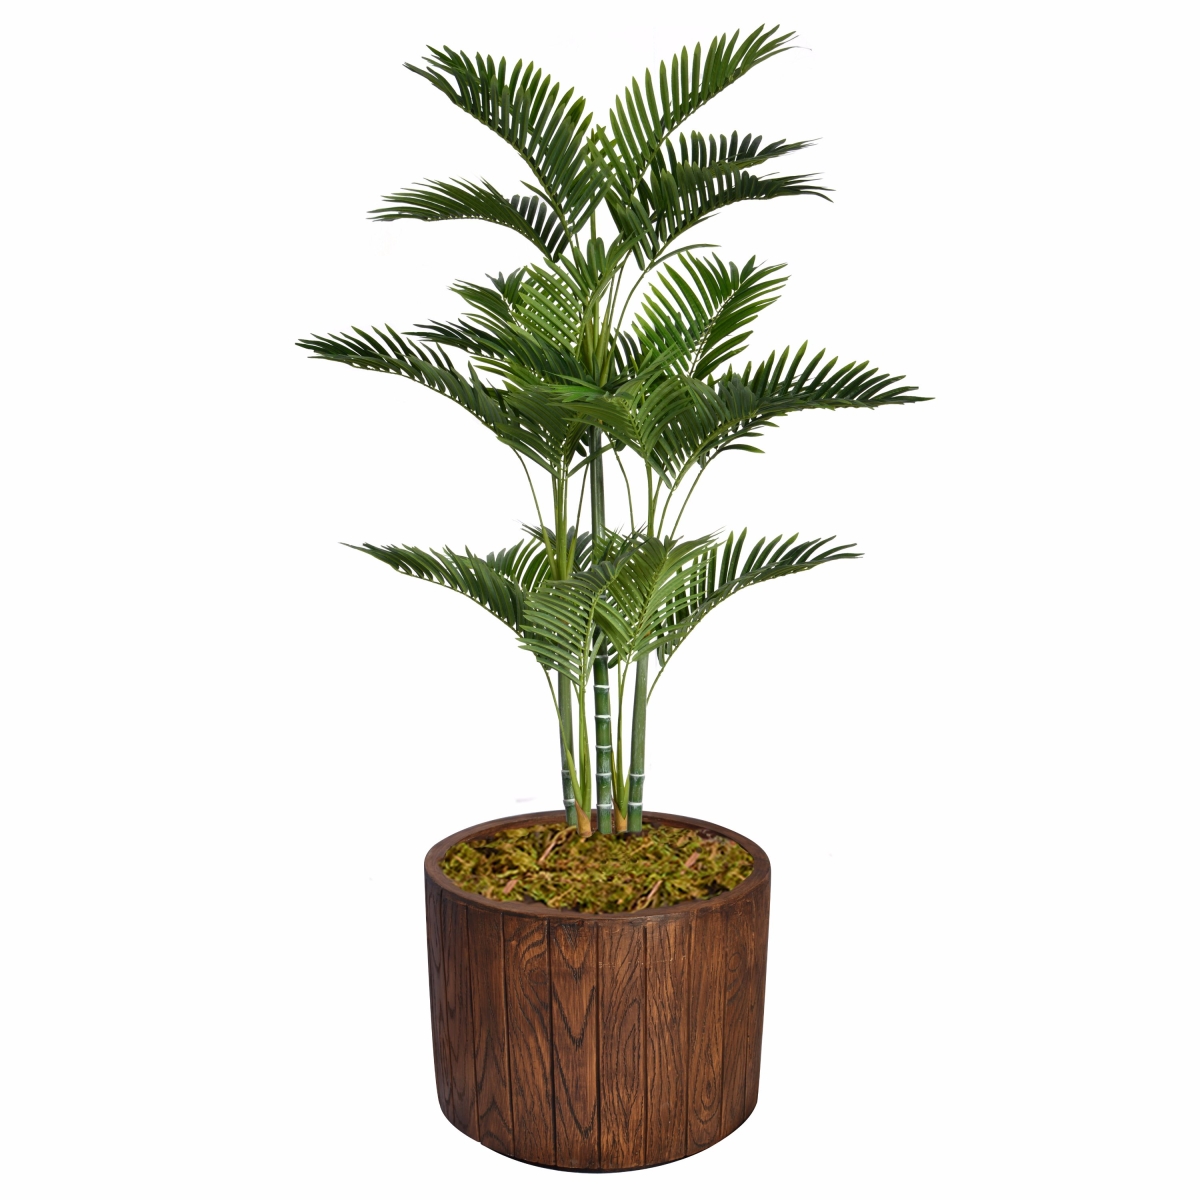 Vhx132202 64.8 In. Tall Palm Tree With Burlap Kit & Fiberstone Planter